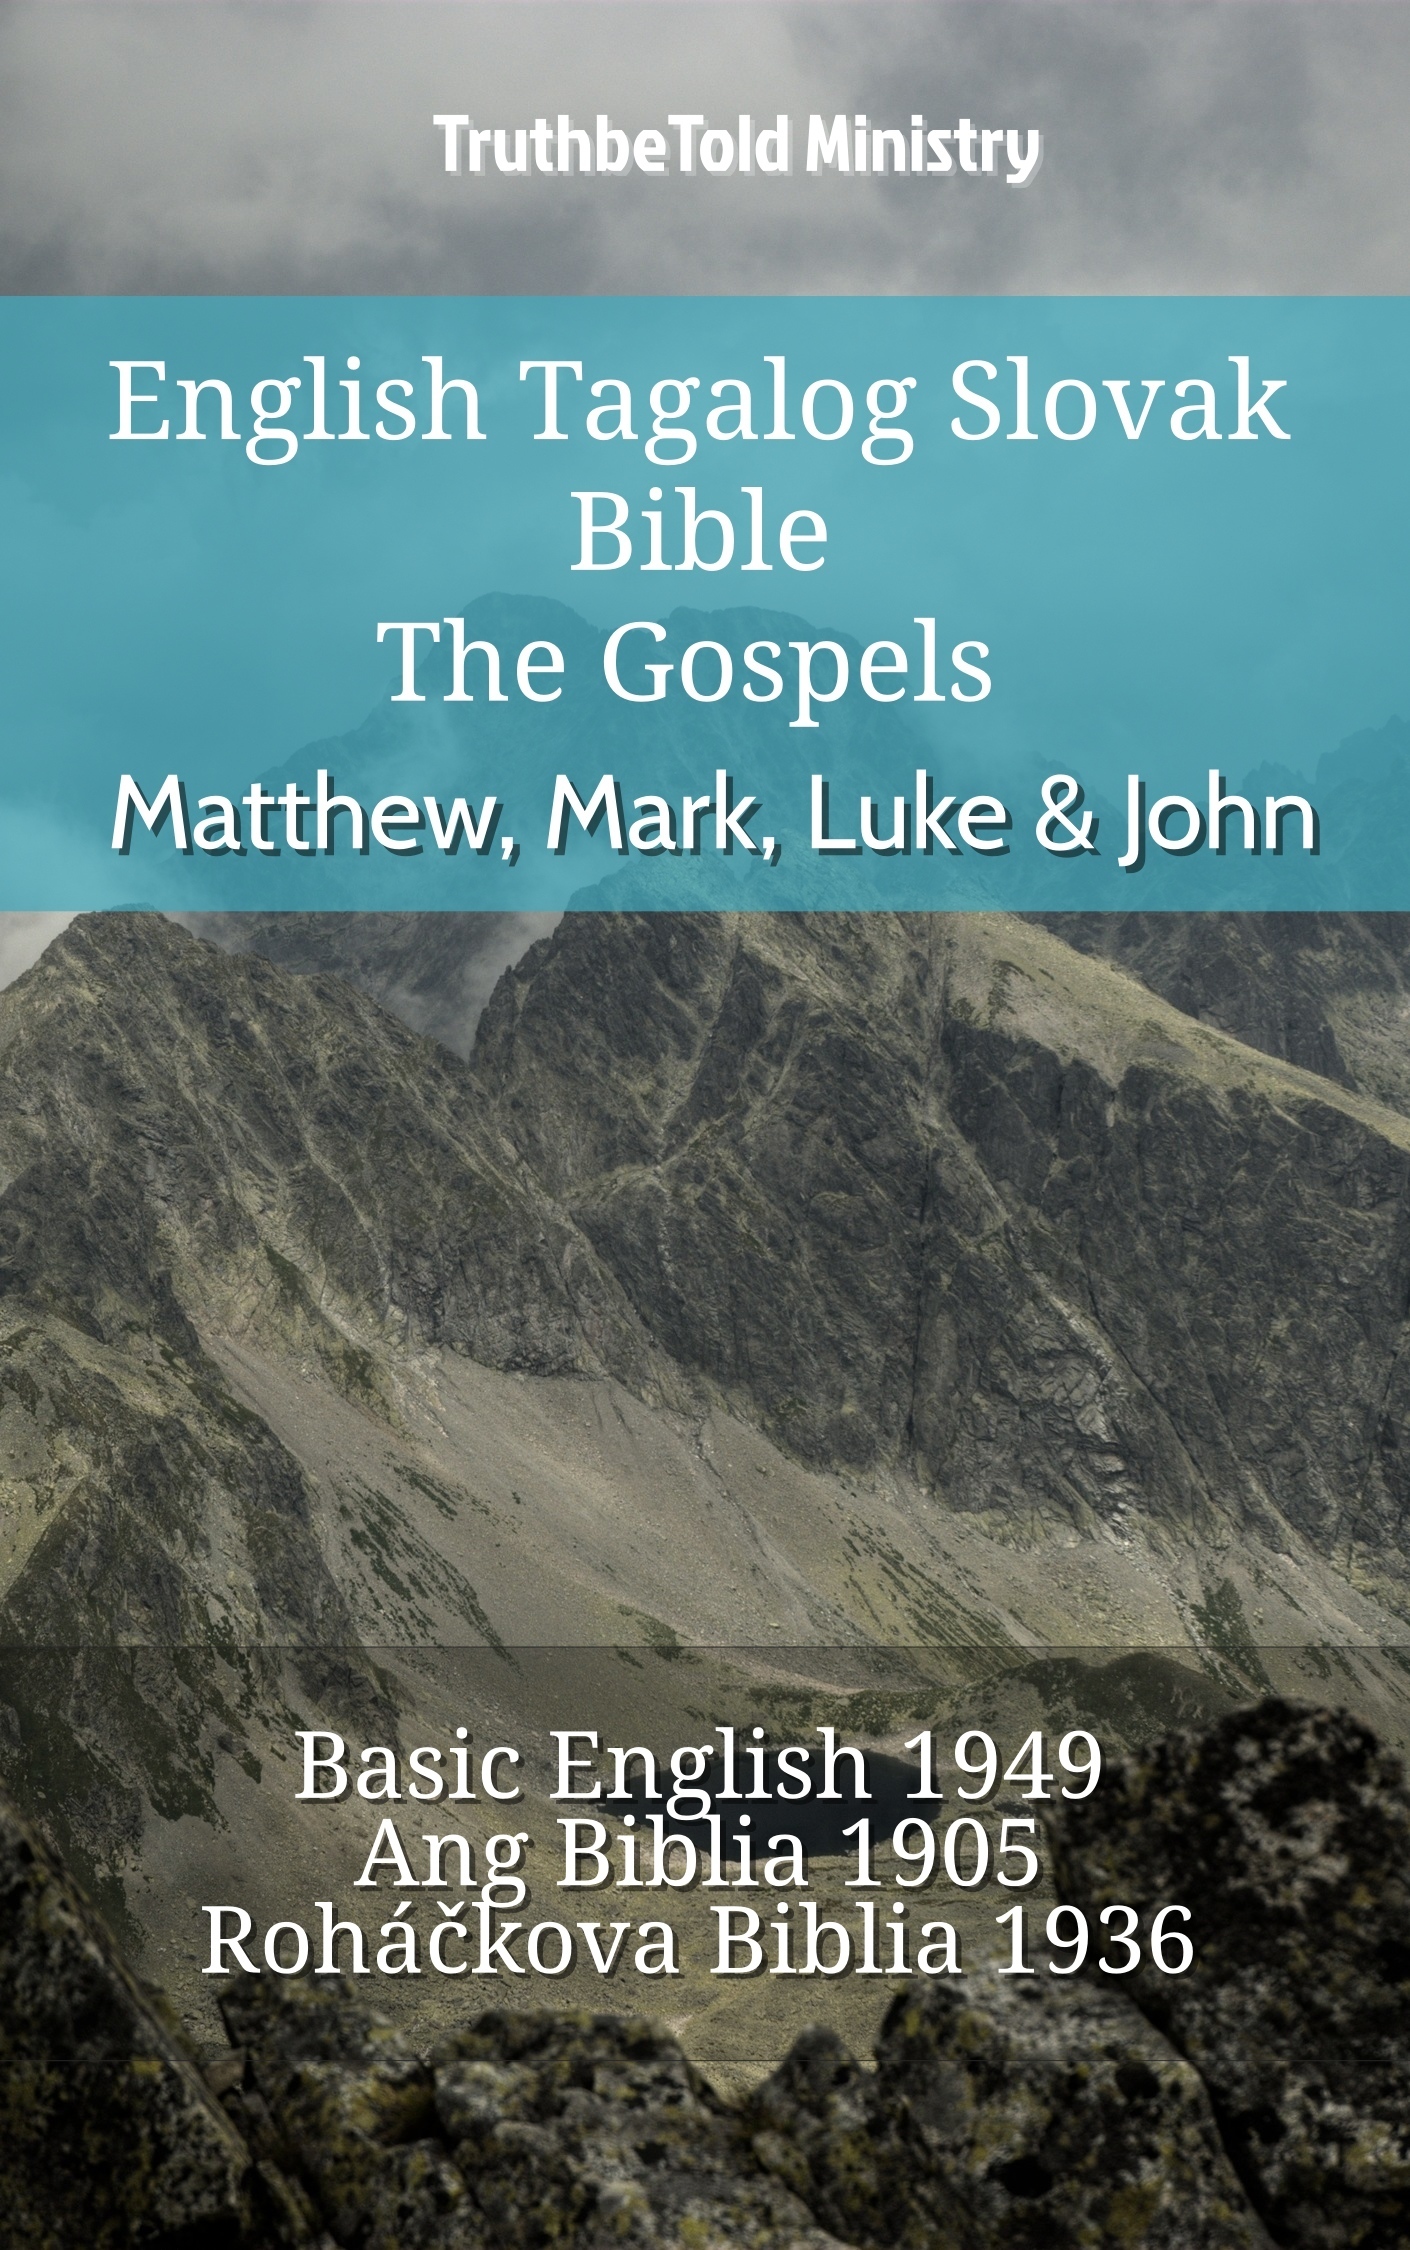 English Tagalog Slovak Bible - The Gospels - Matthew, Mark, Luke & John